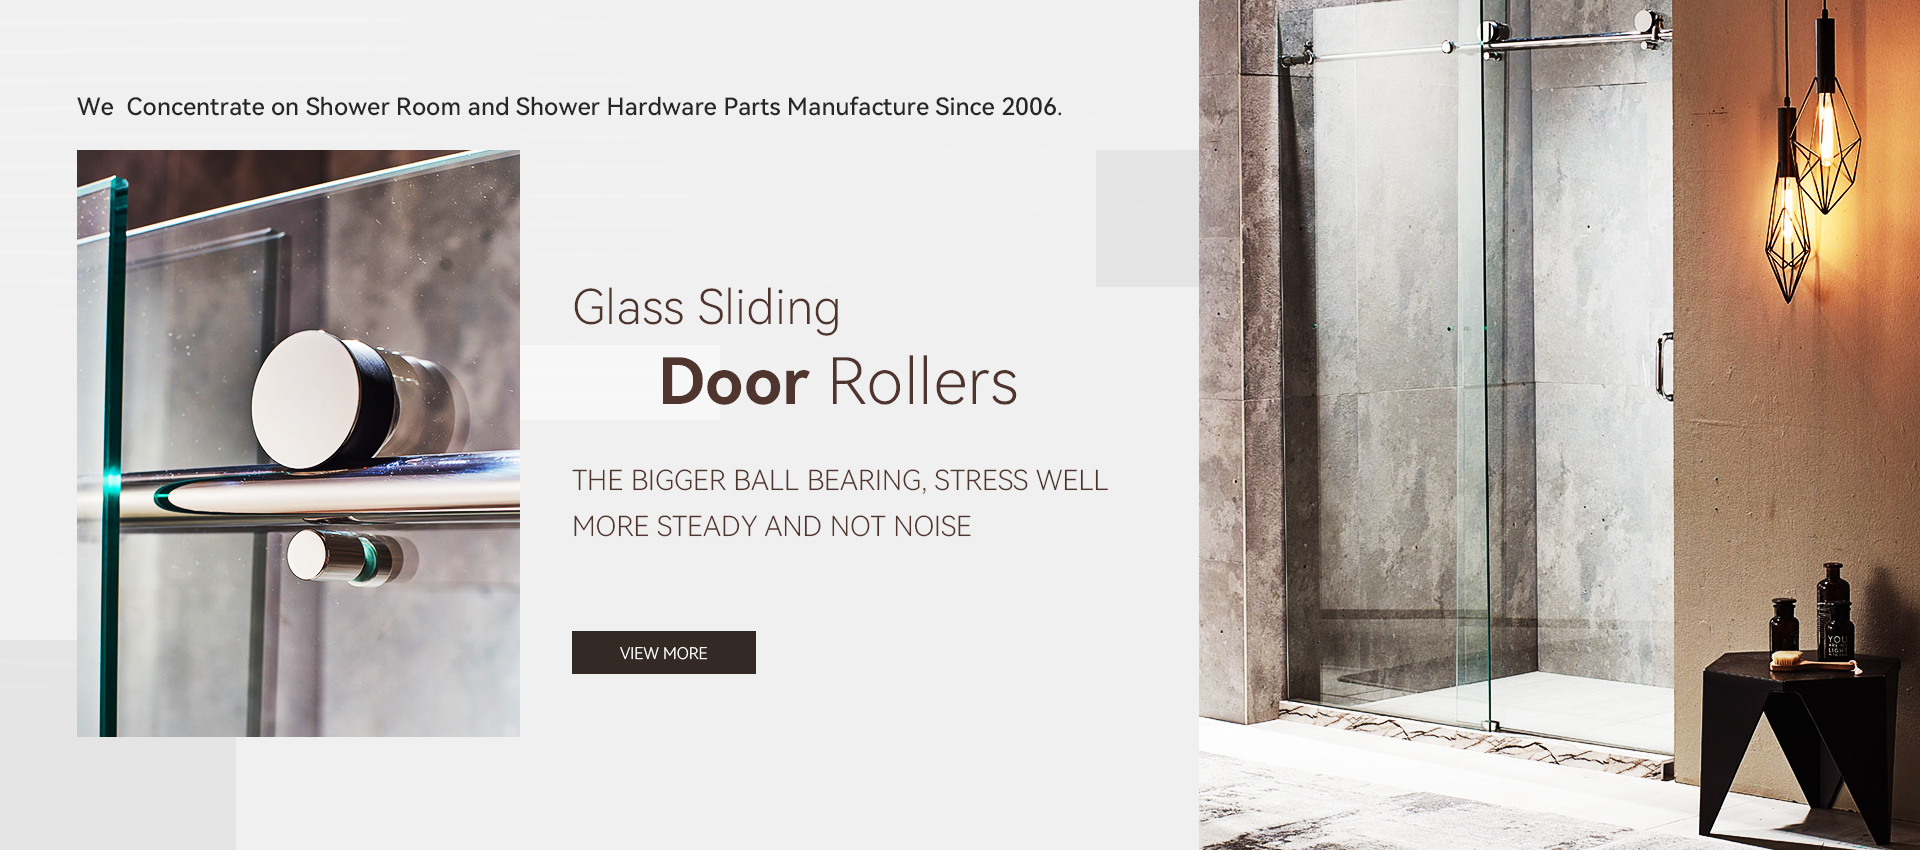 Glass Hardware Manufacture Shower Door Runner